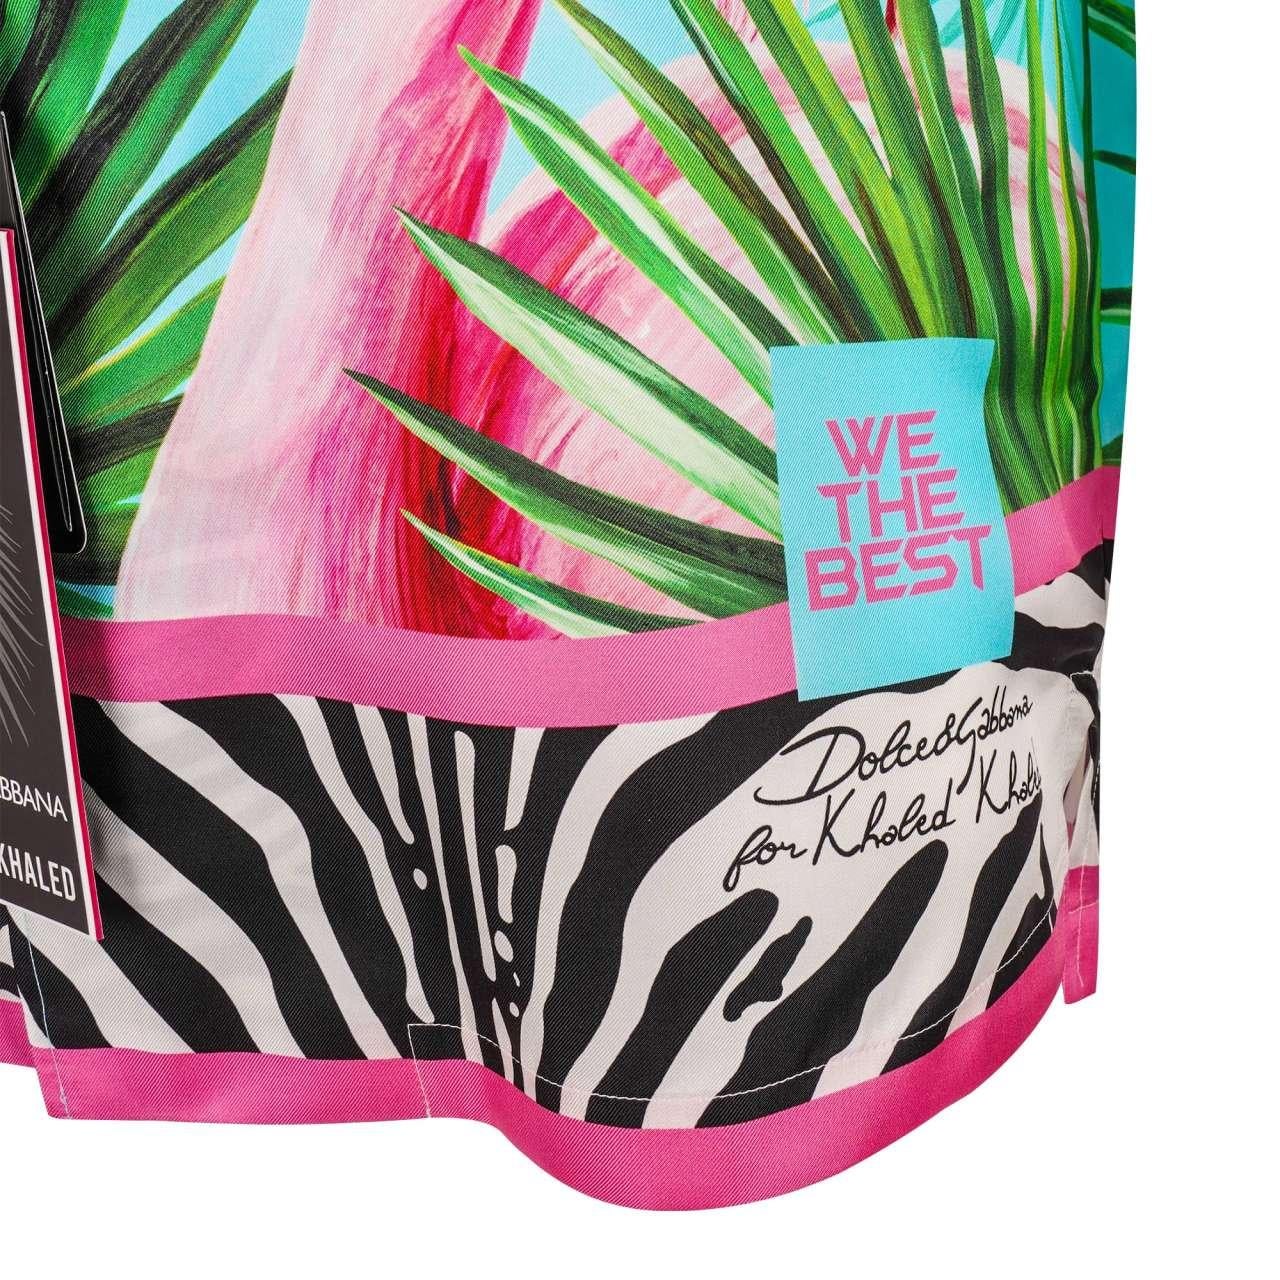 Men's Dolce & Gabbana - DJ Khaled Silk Flamingo Zebra Shirt with Sunglasses and CD 43 For Sale